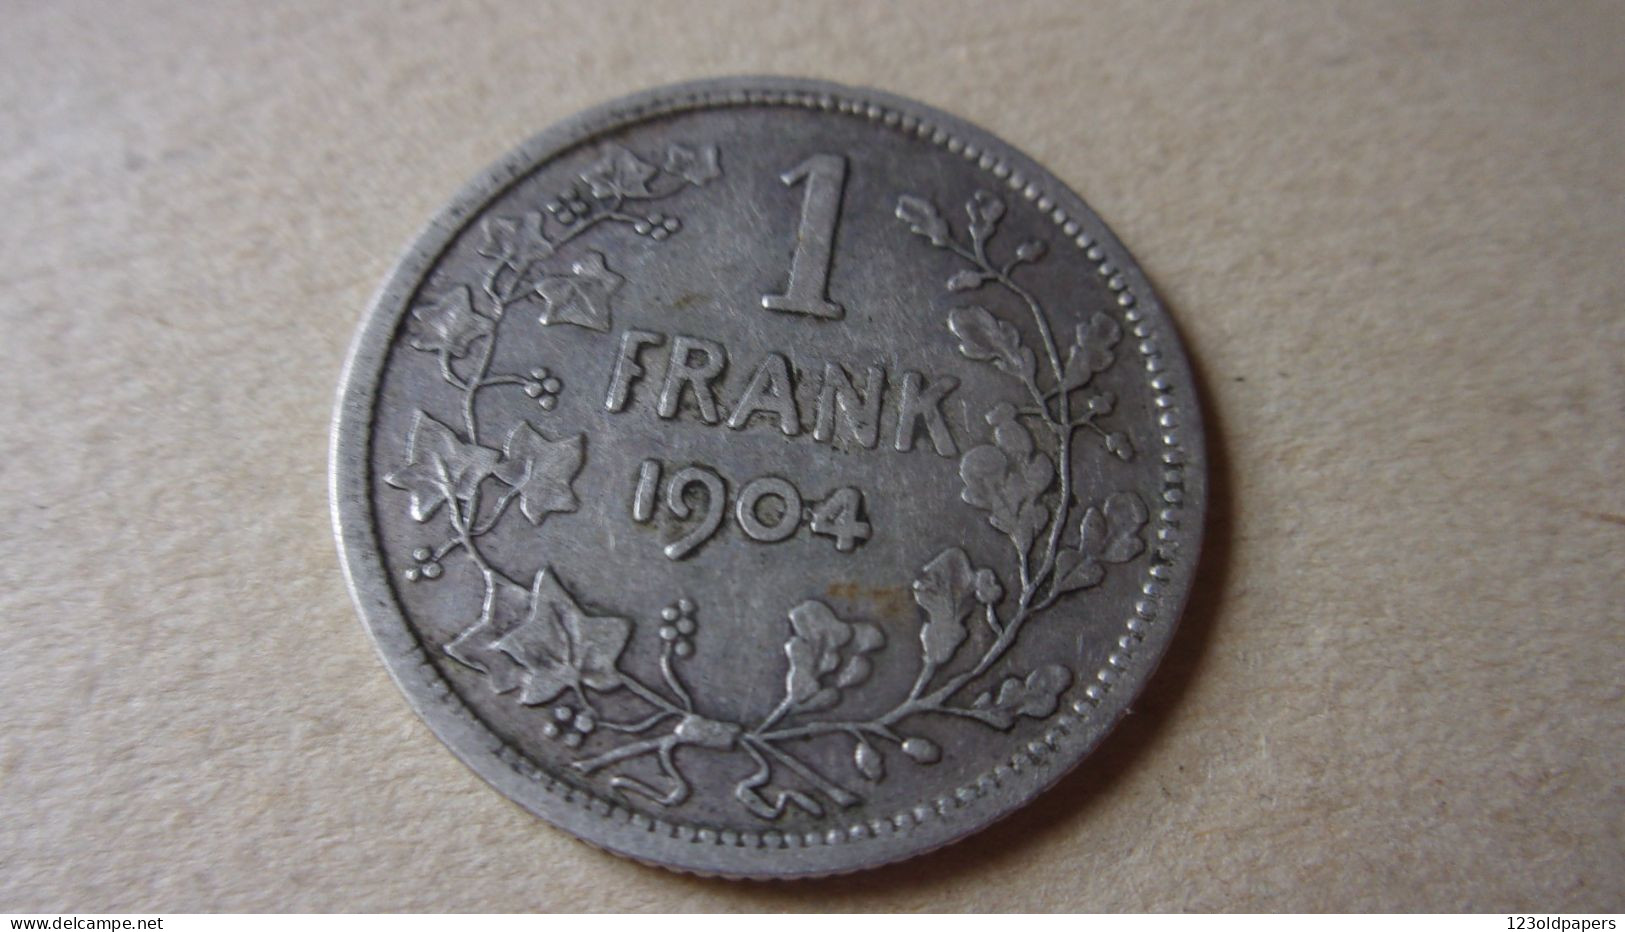 1 FRANK 1904 TTB+ "DER BELGEN" ARGENT - 1 Franc